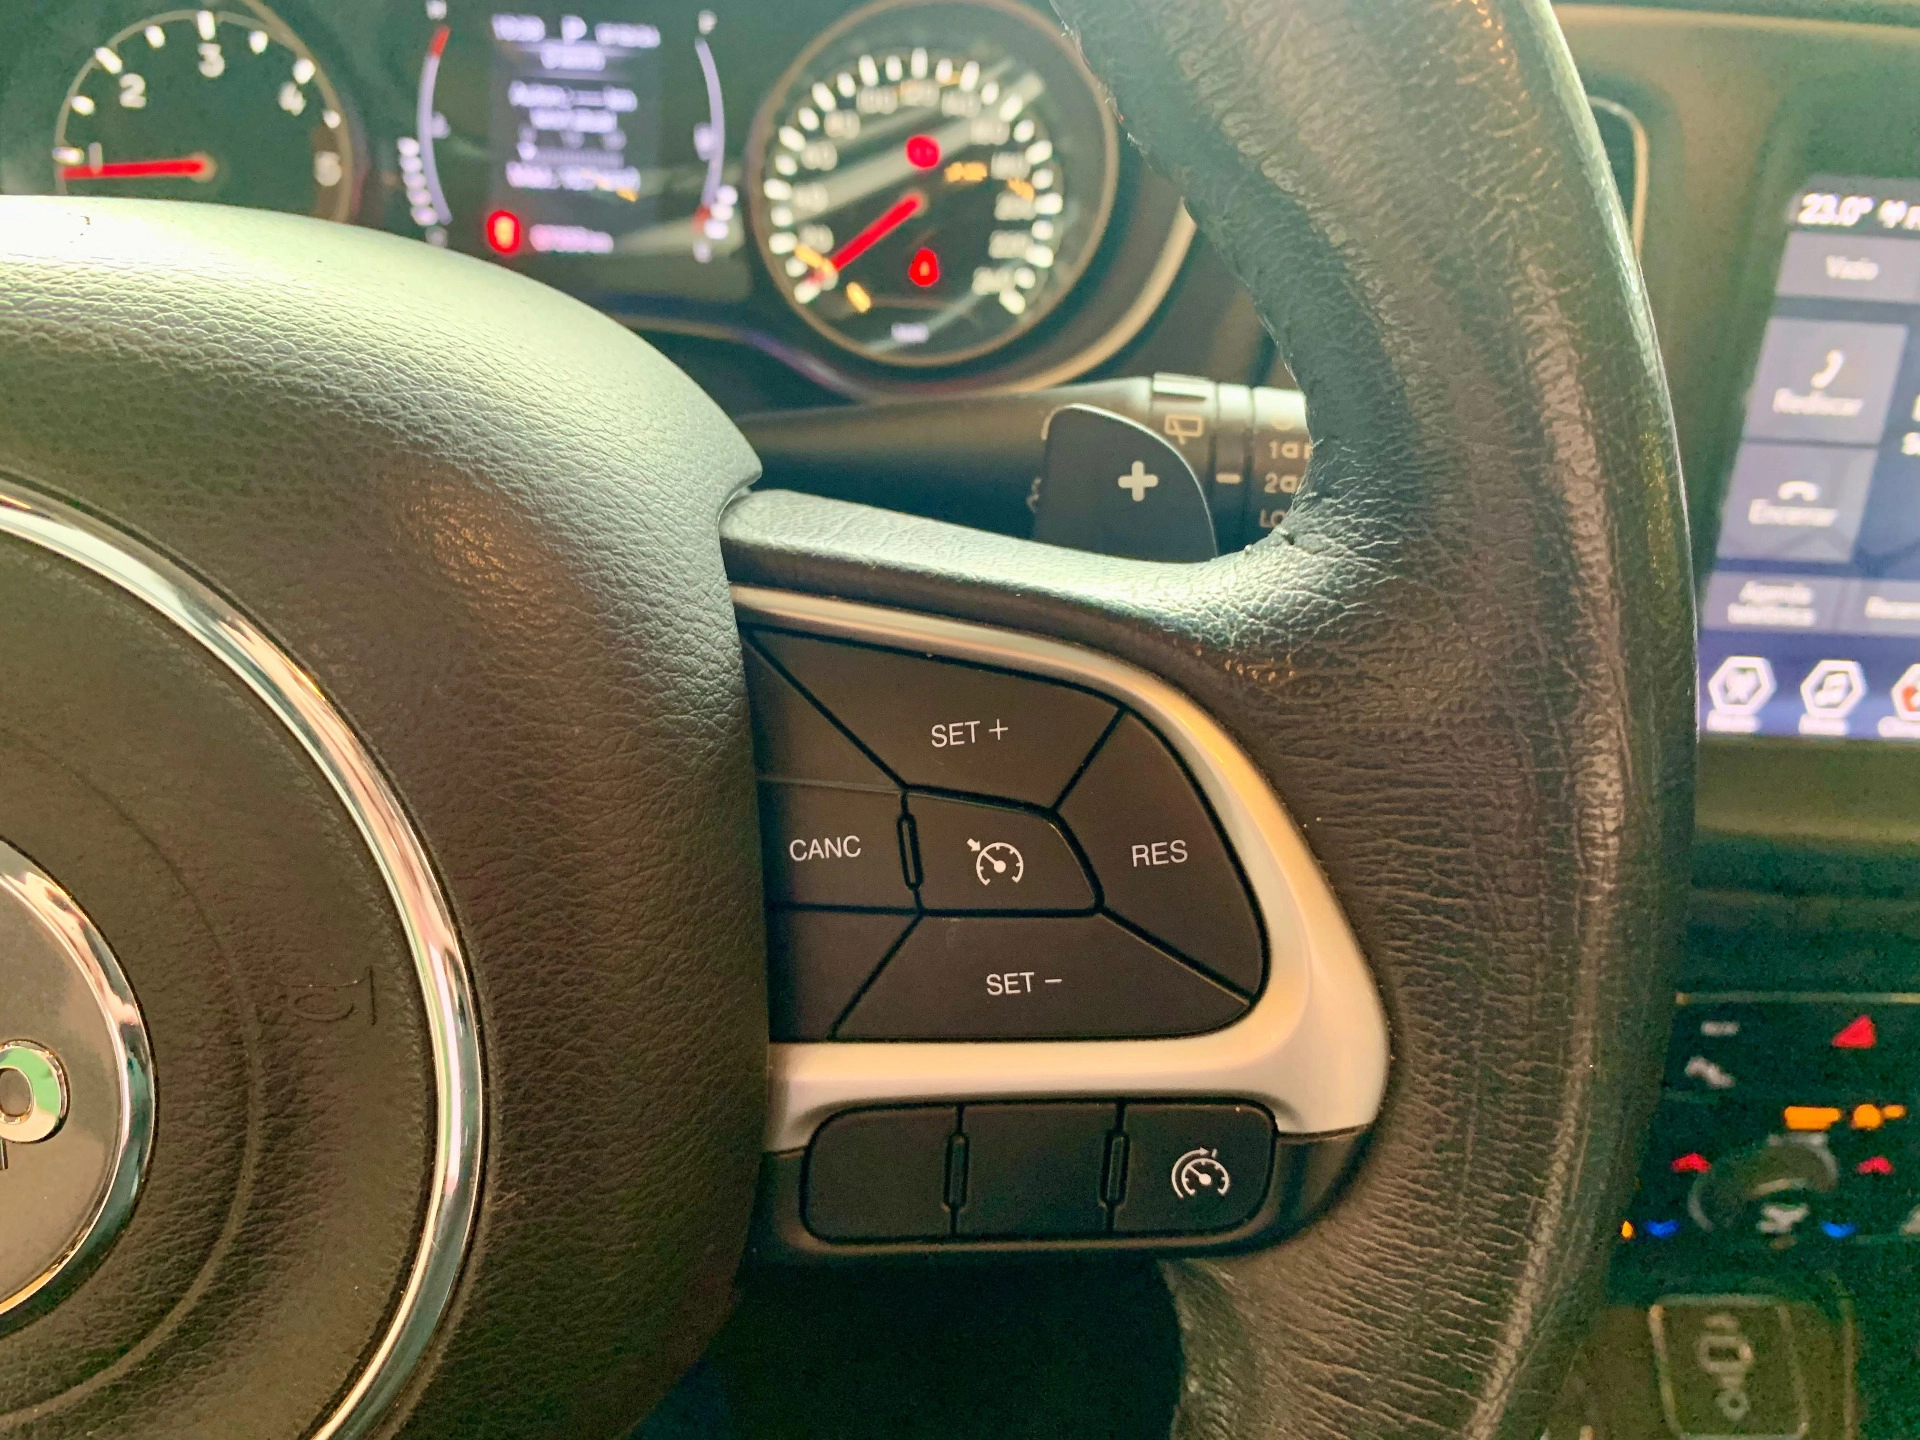 jeep COMPASS 2.0 16V DIESEL LONGITUDE 4X4 AUTOMÁTICO 2018